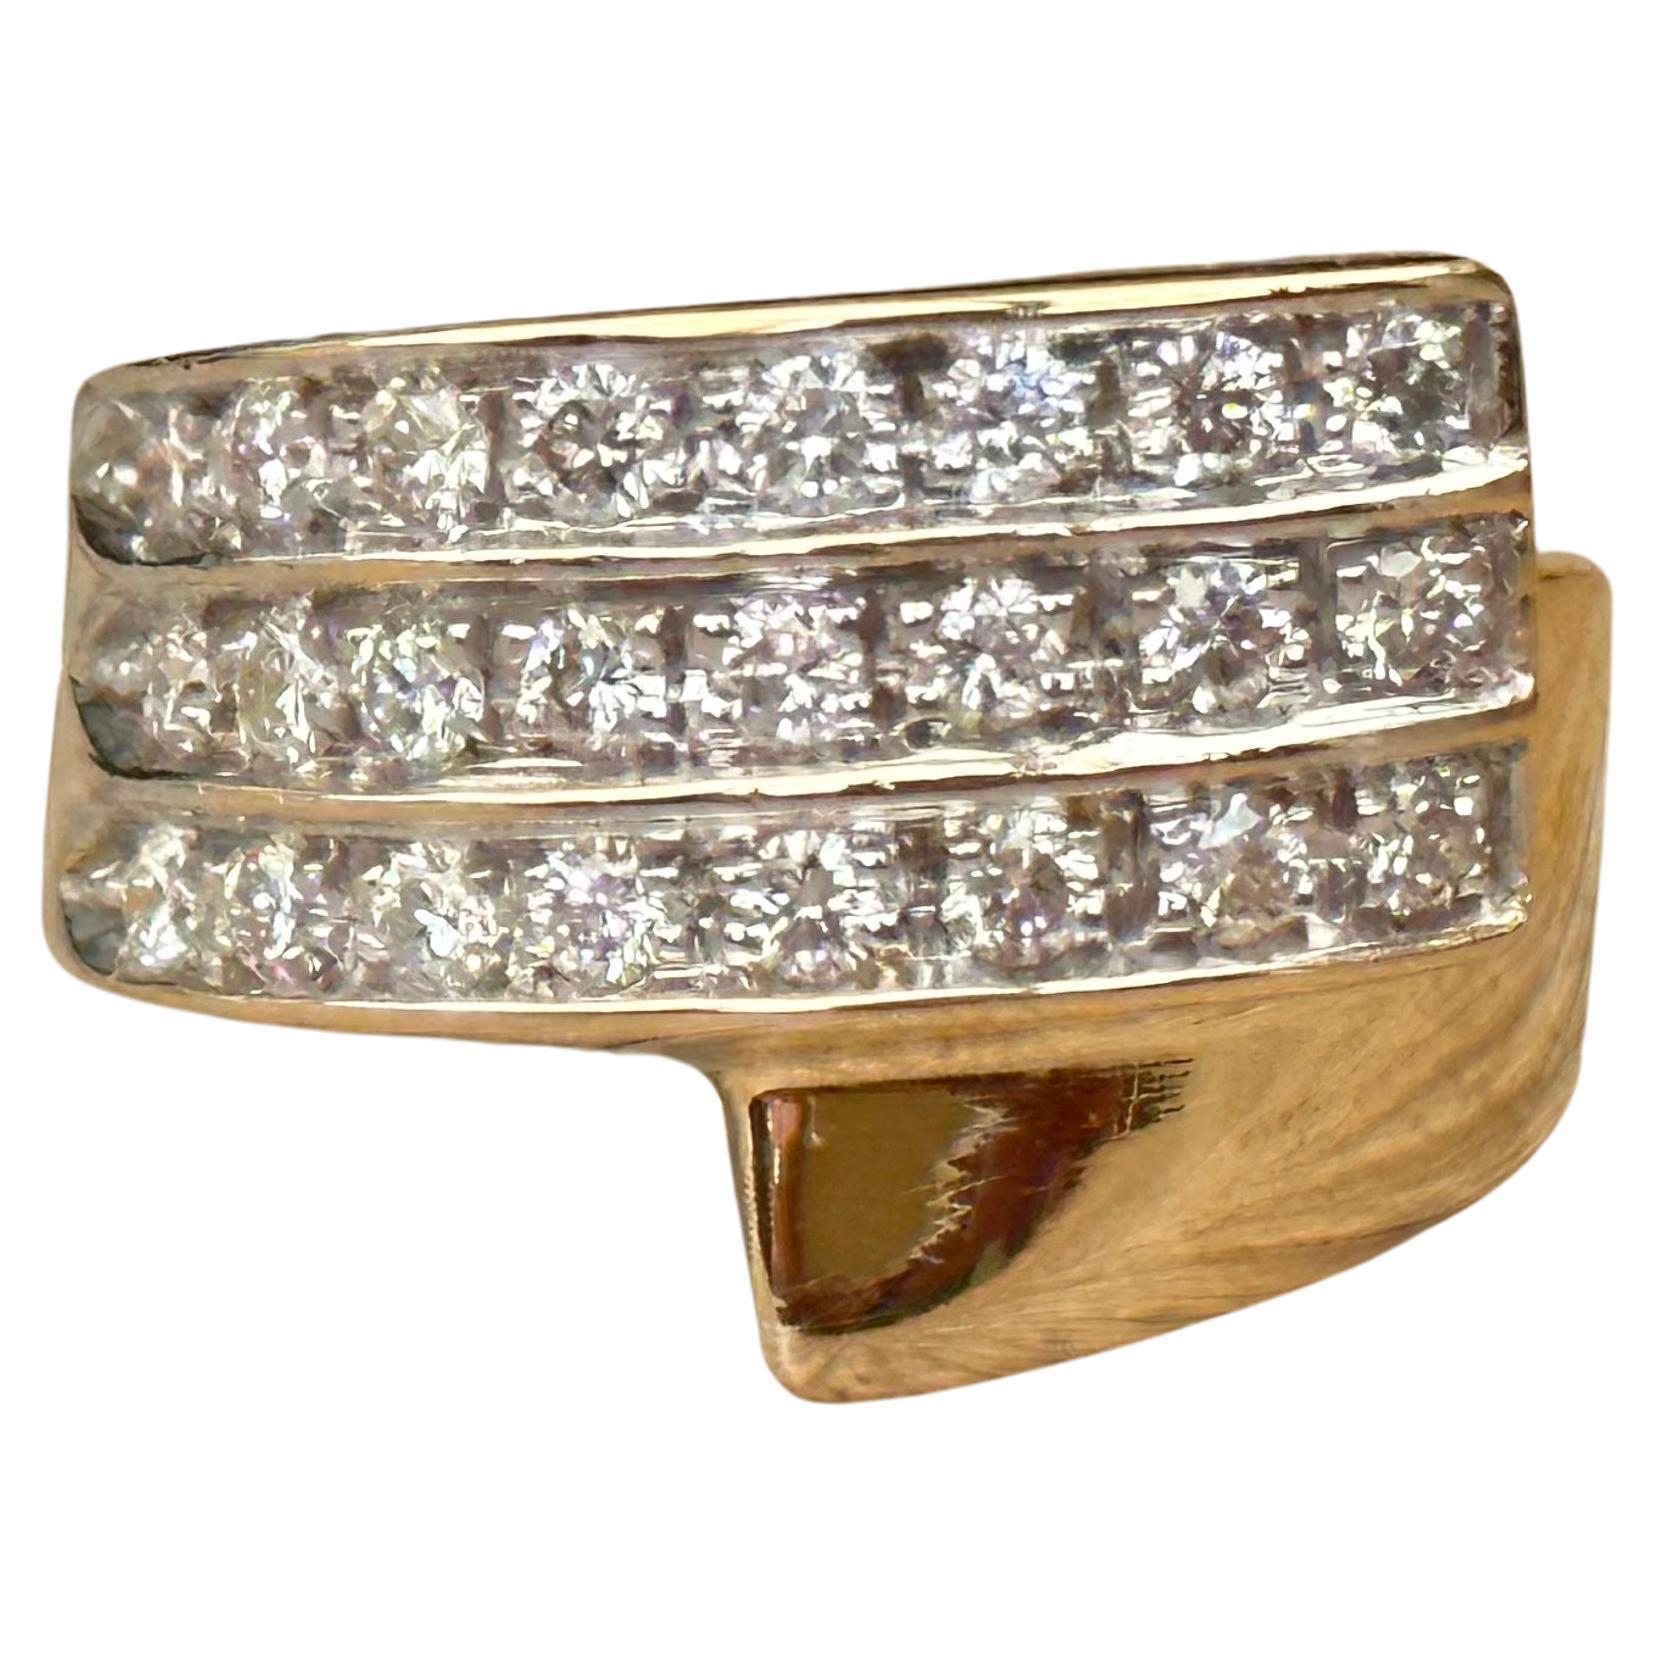 Rochas Paris ring in 18 carat gold and diamonds